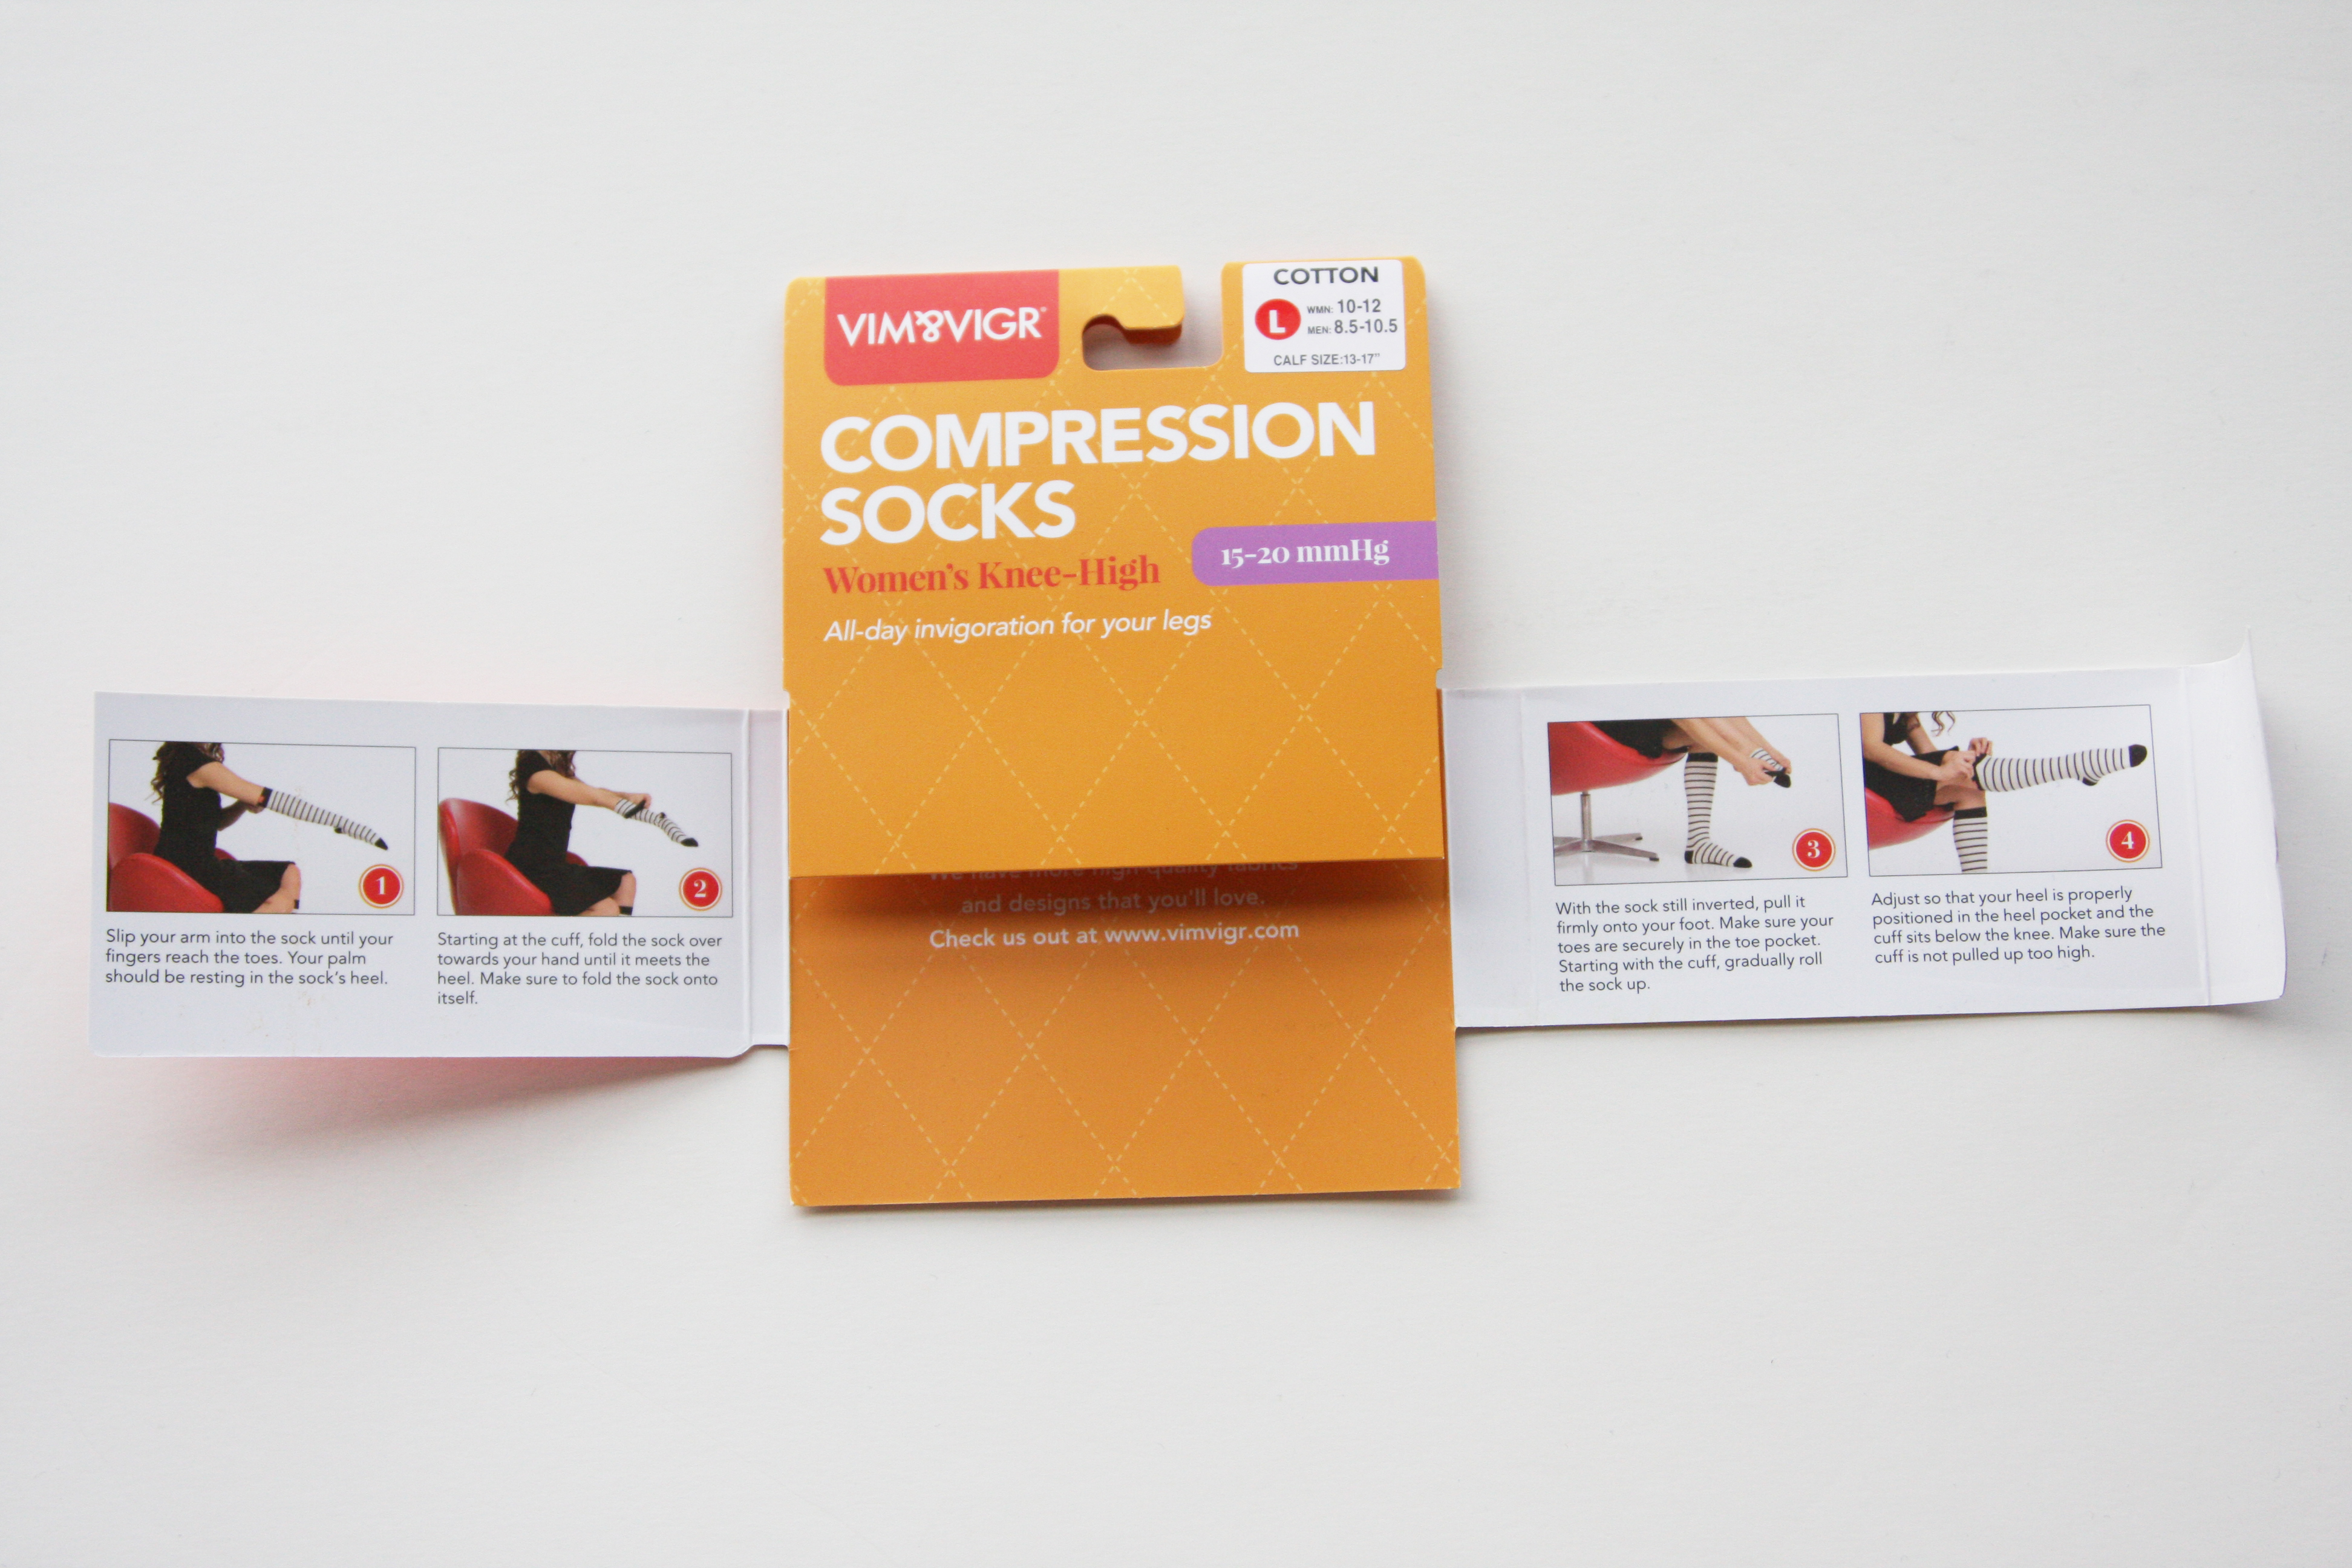 VIM & VIGR Compression Socks instructions in the packaging